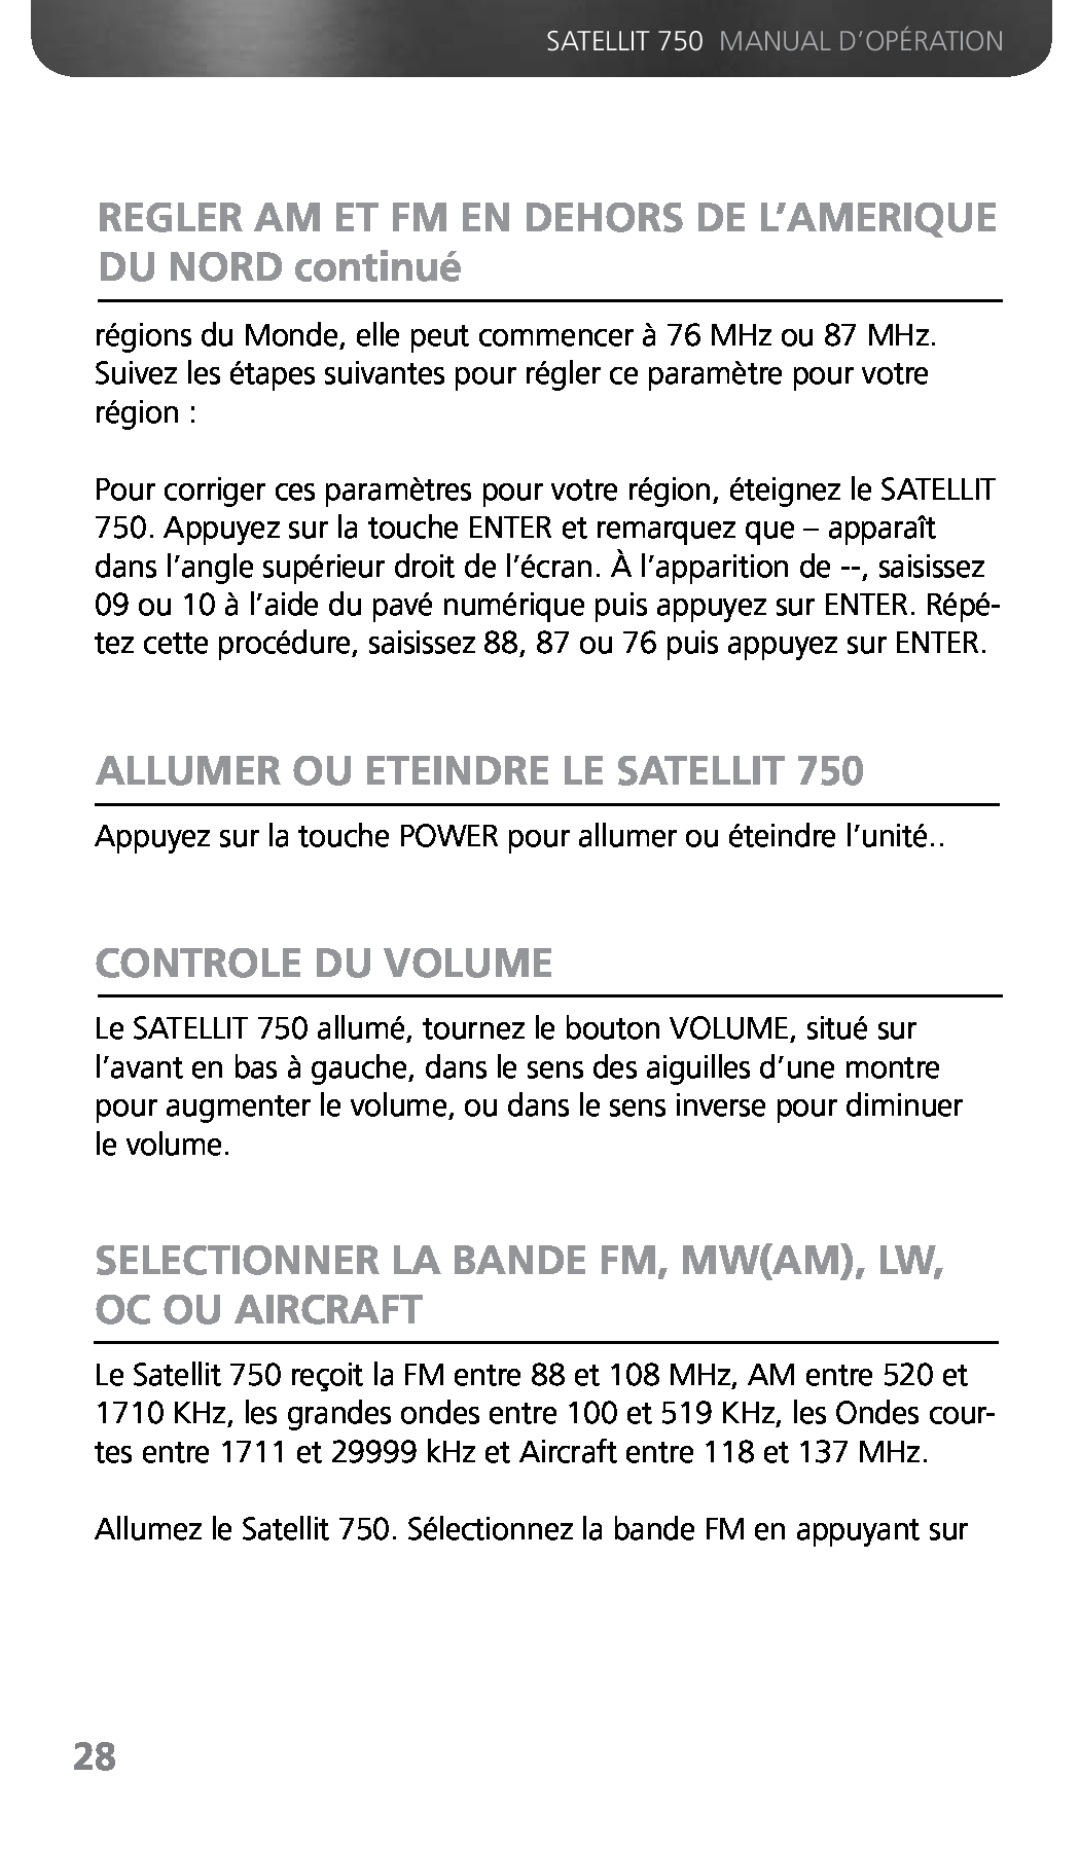 Grundig 750 owner manual Allumer Ou Eteindre Le Satellit, Controle Du Volume 